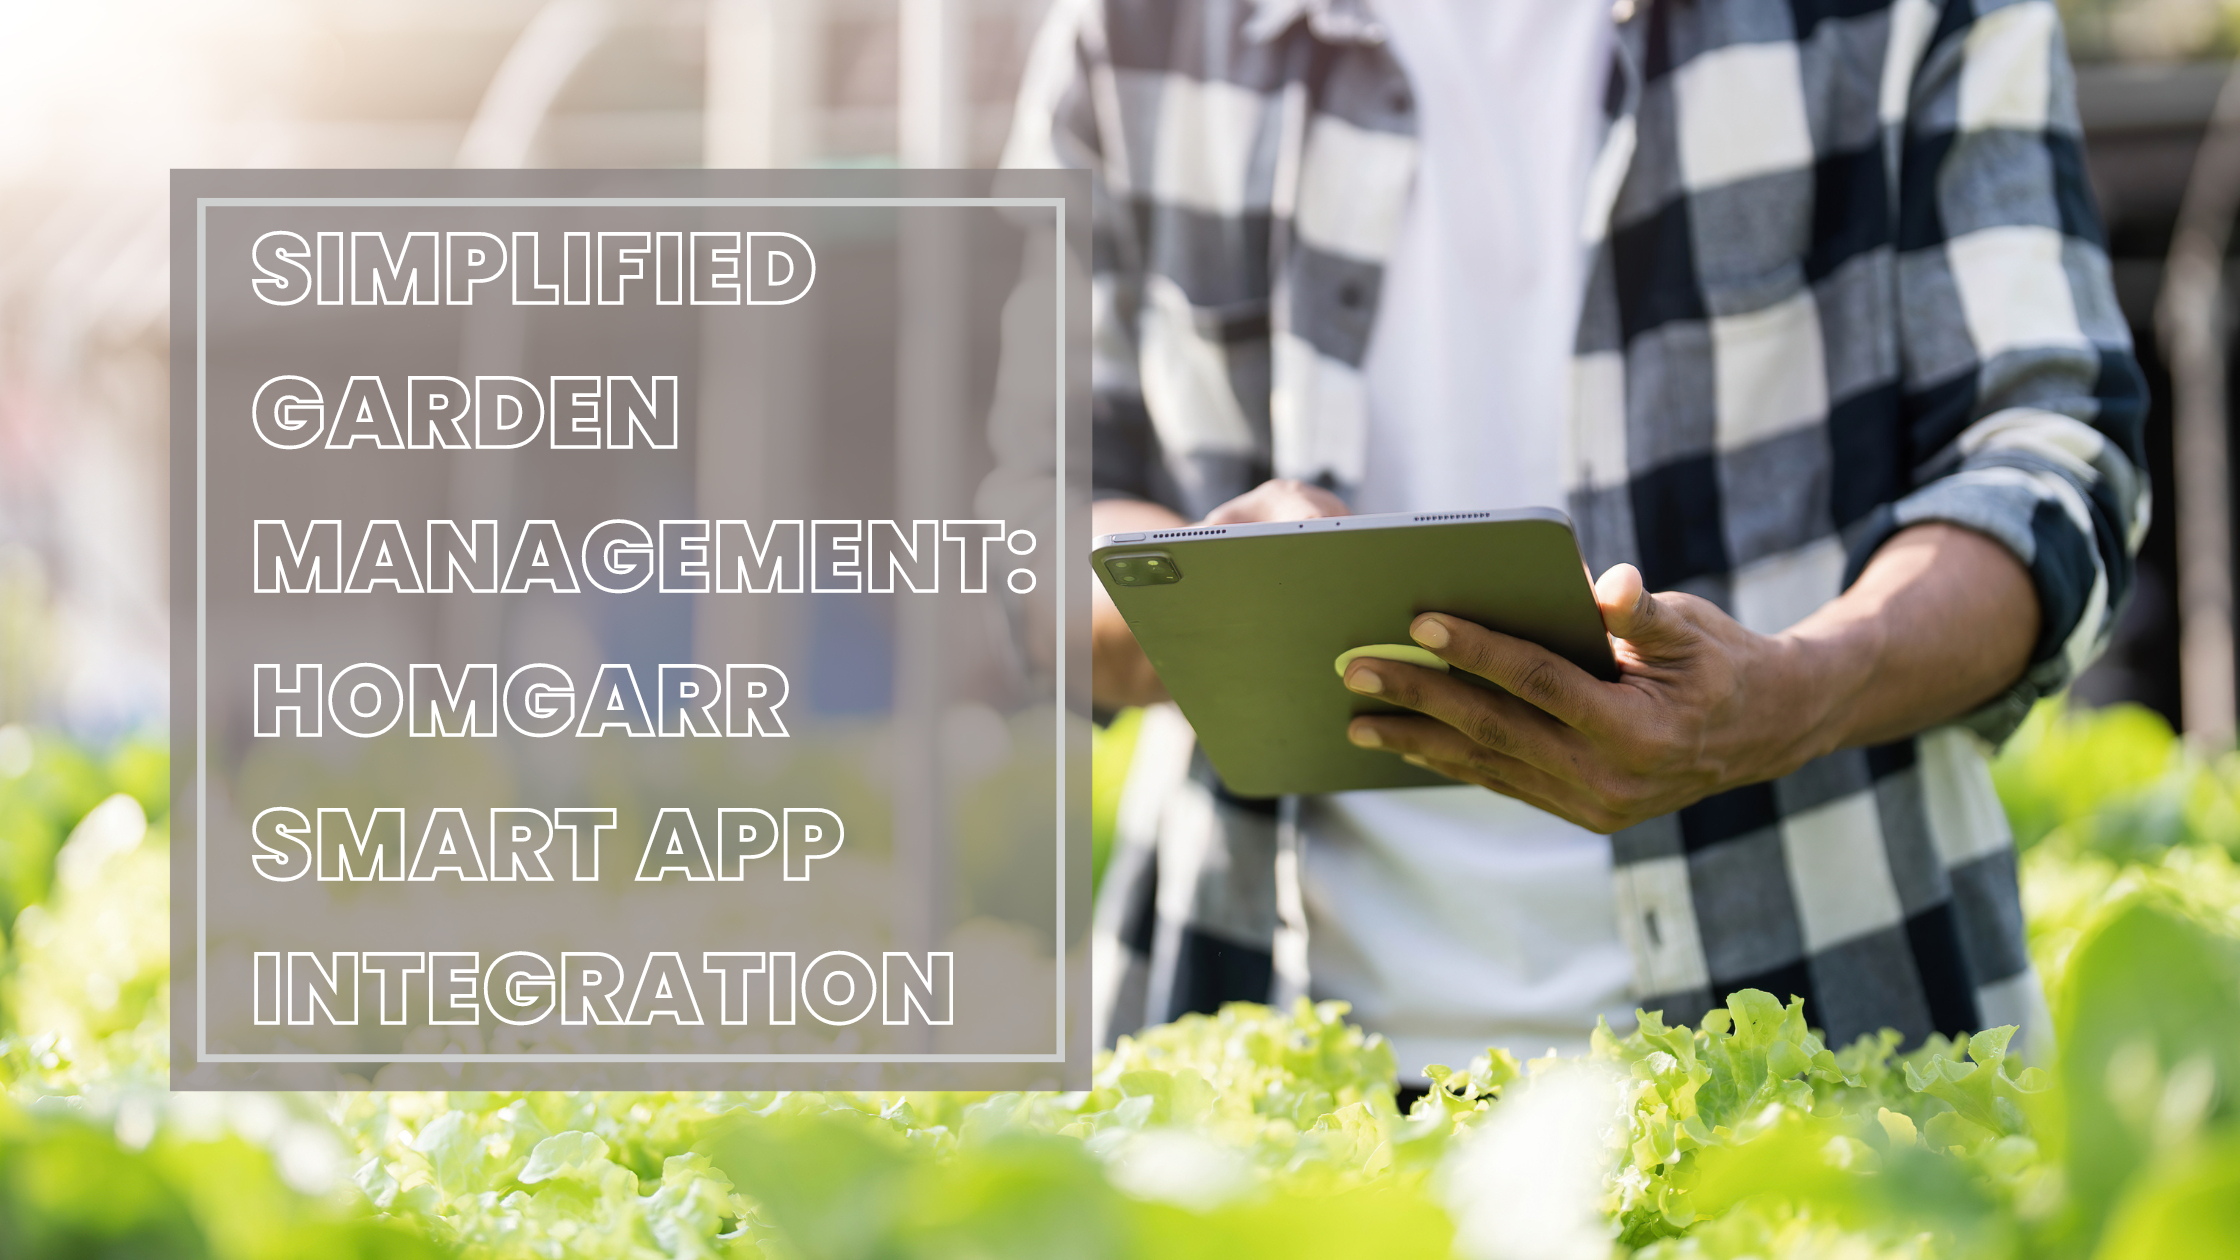 Simplified Garden Management: Homgarr Smart App Integration